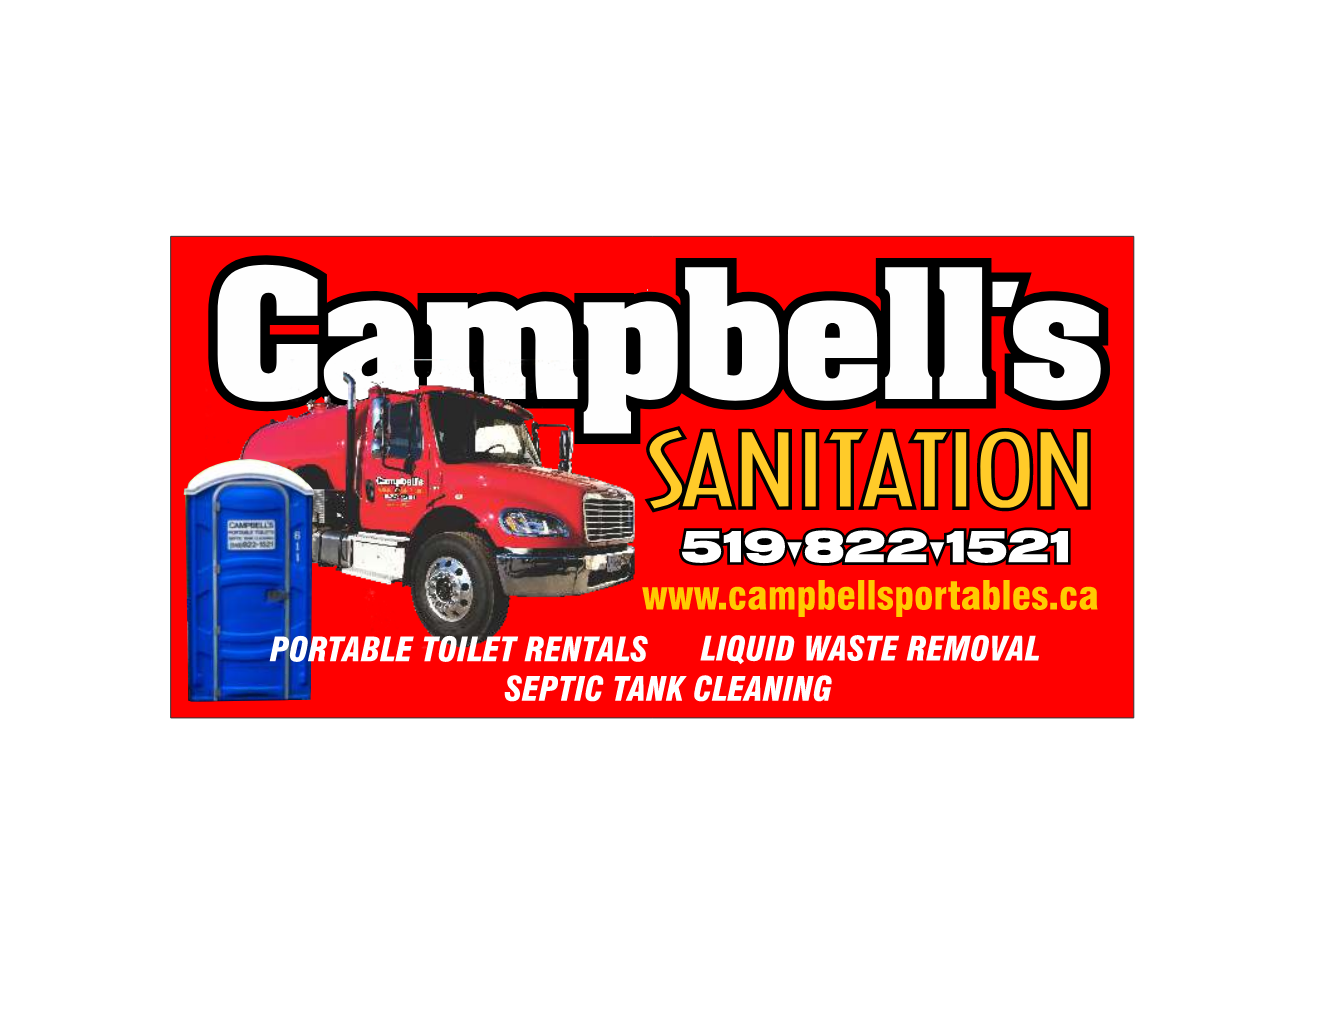 Campbell's Sanitation